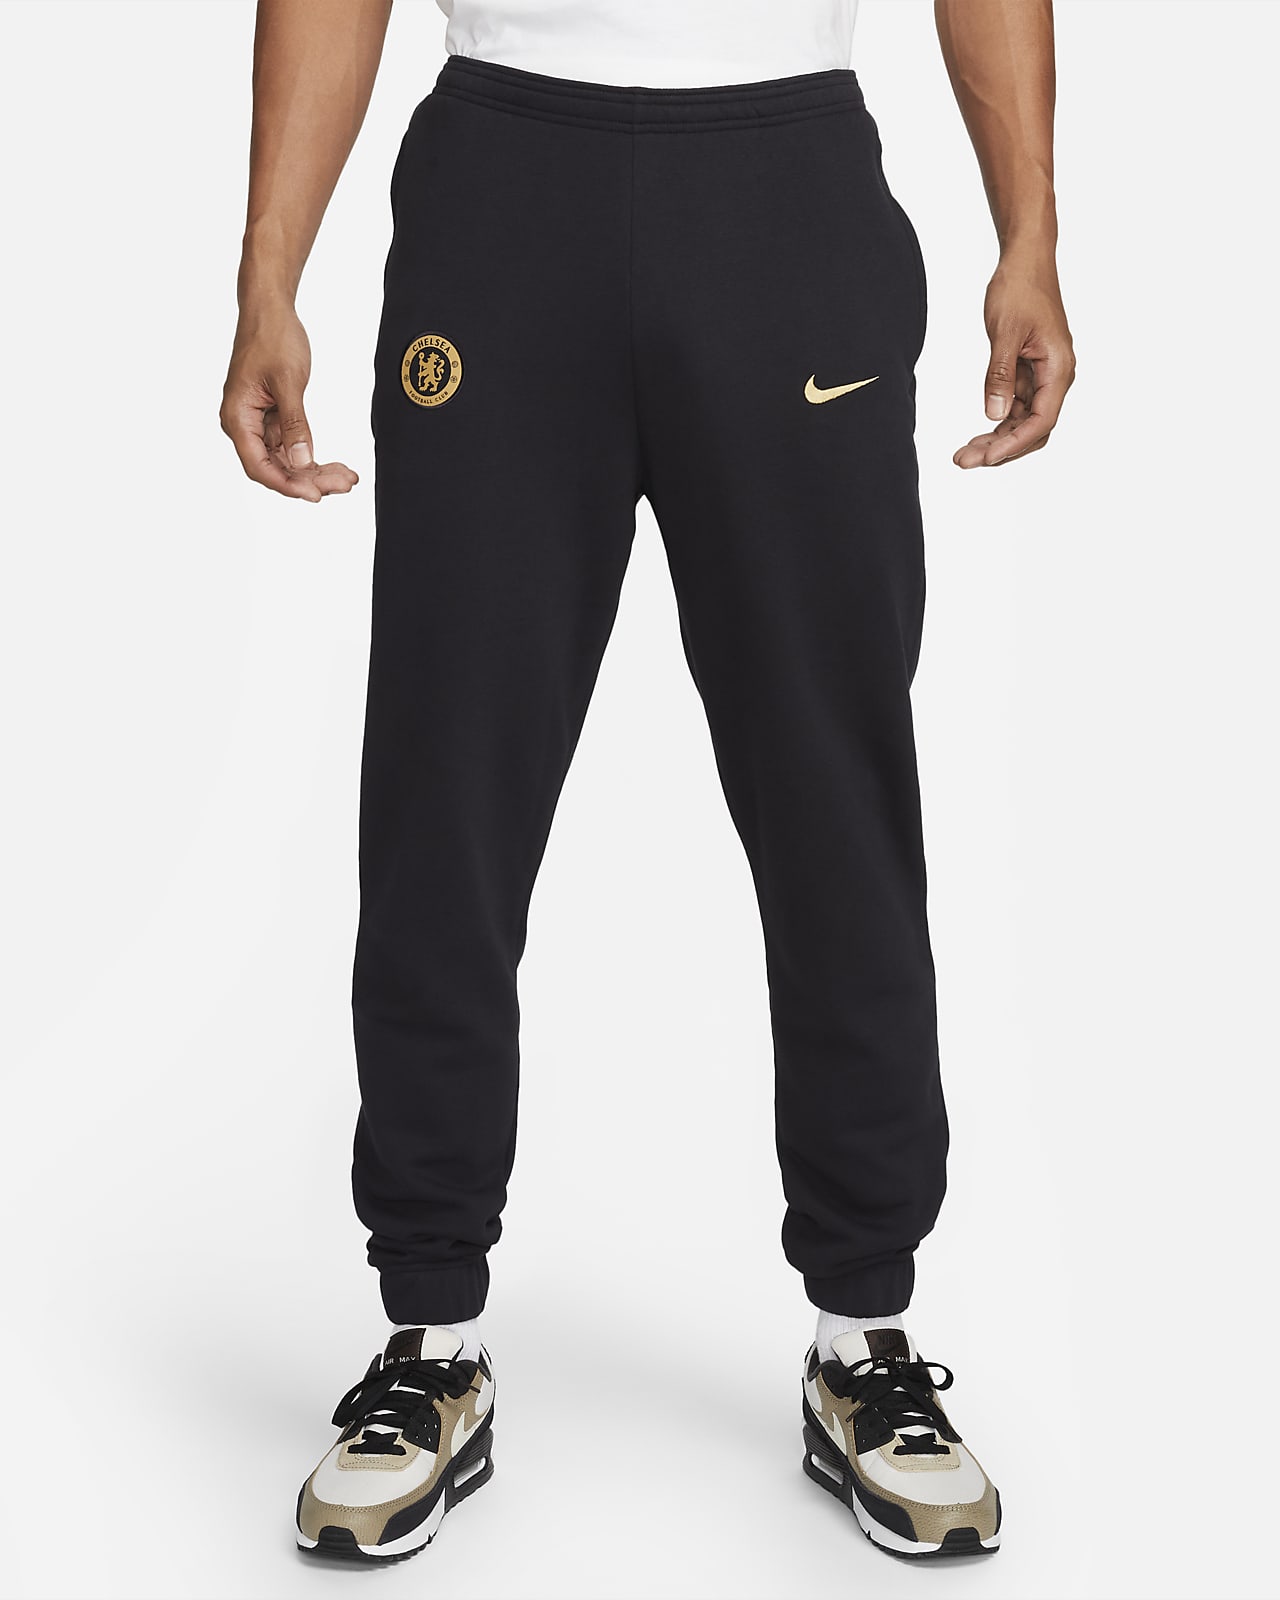 Chelsea FC Men's Nike Soccer Fleece Pants